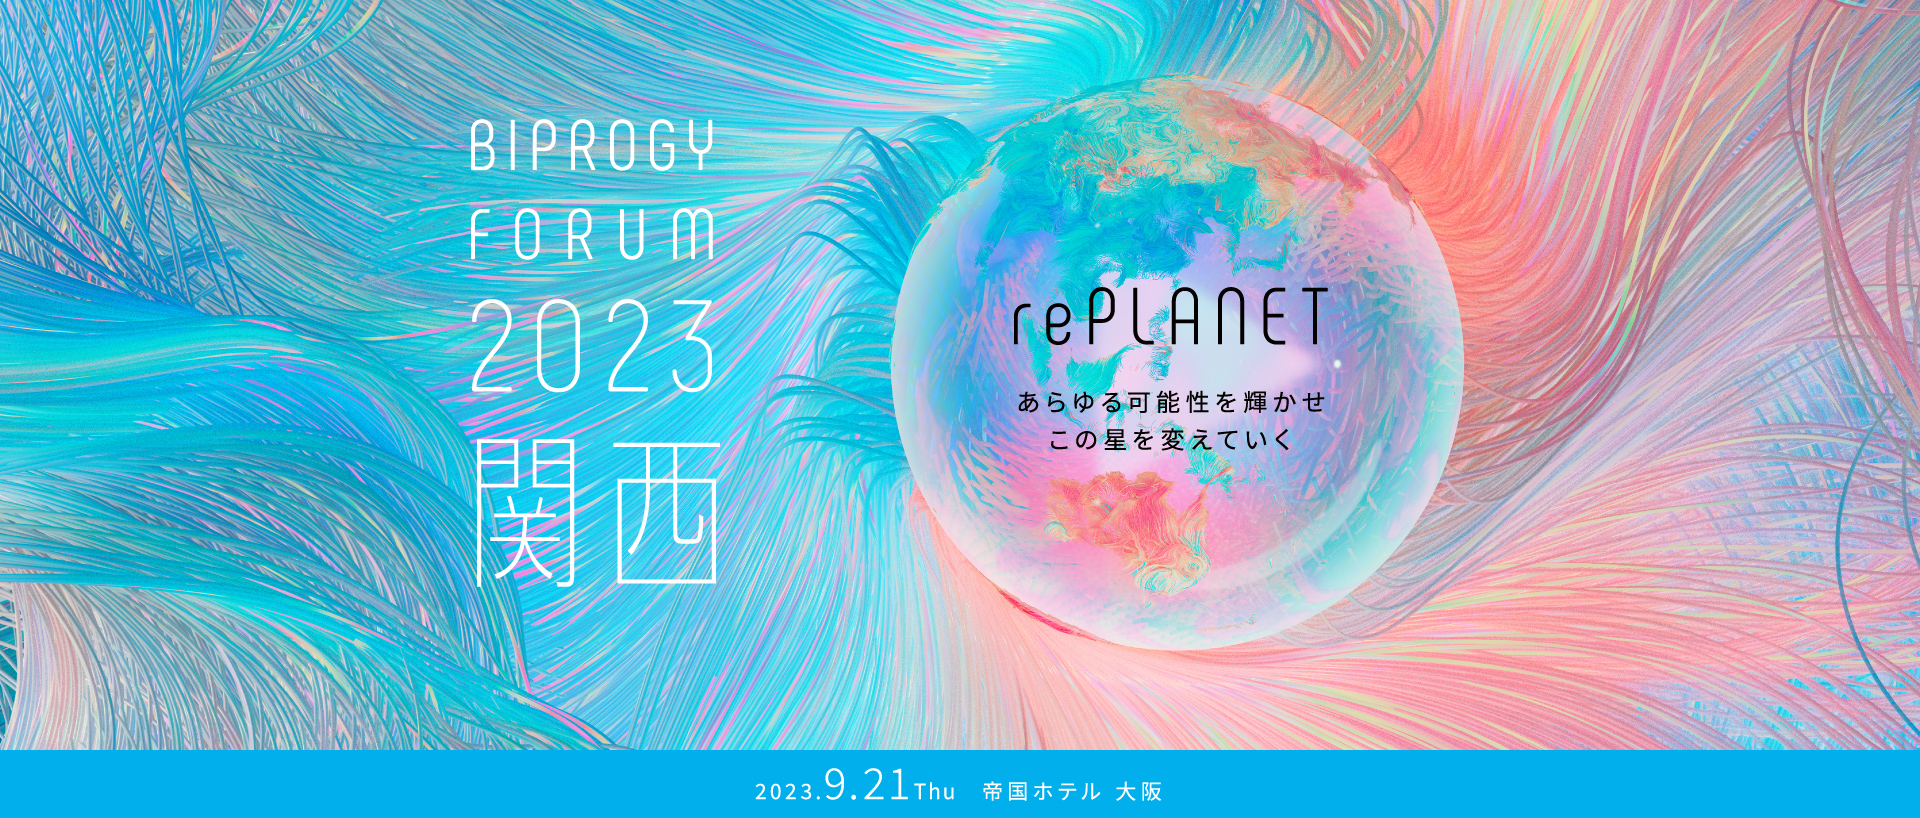 BIPROGY FORUM 2023 関西 「rePLANET　あらゆる可能性を輝かせこの星を変えていく」　2023.9.21 Thu　帝国ホテル 大阪